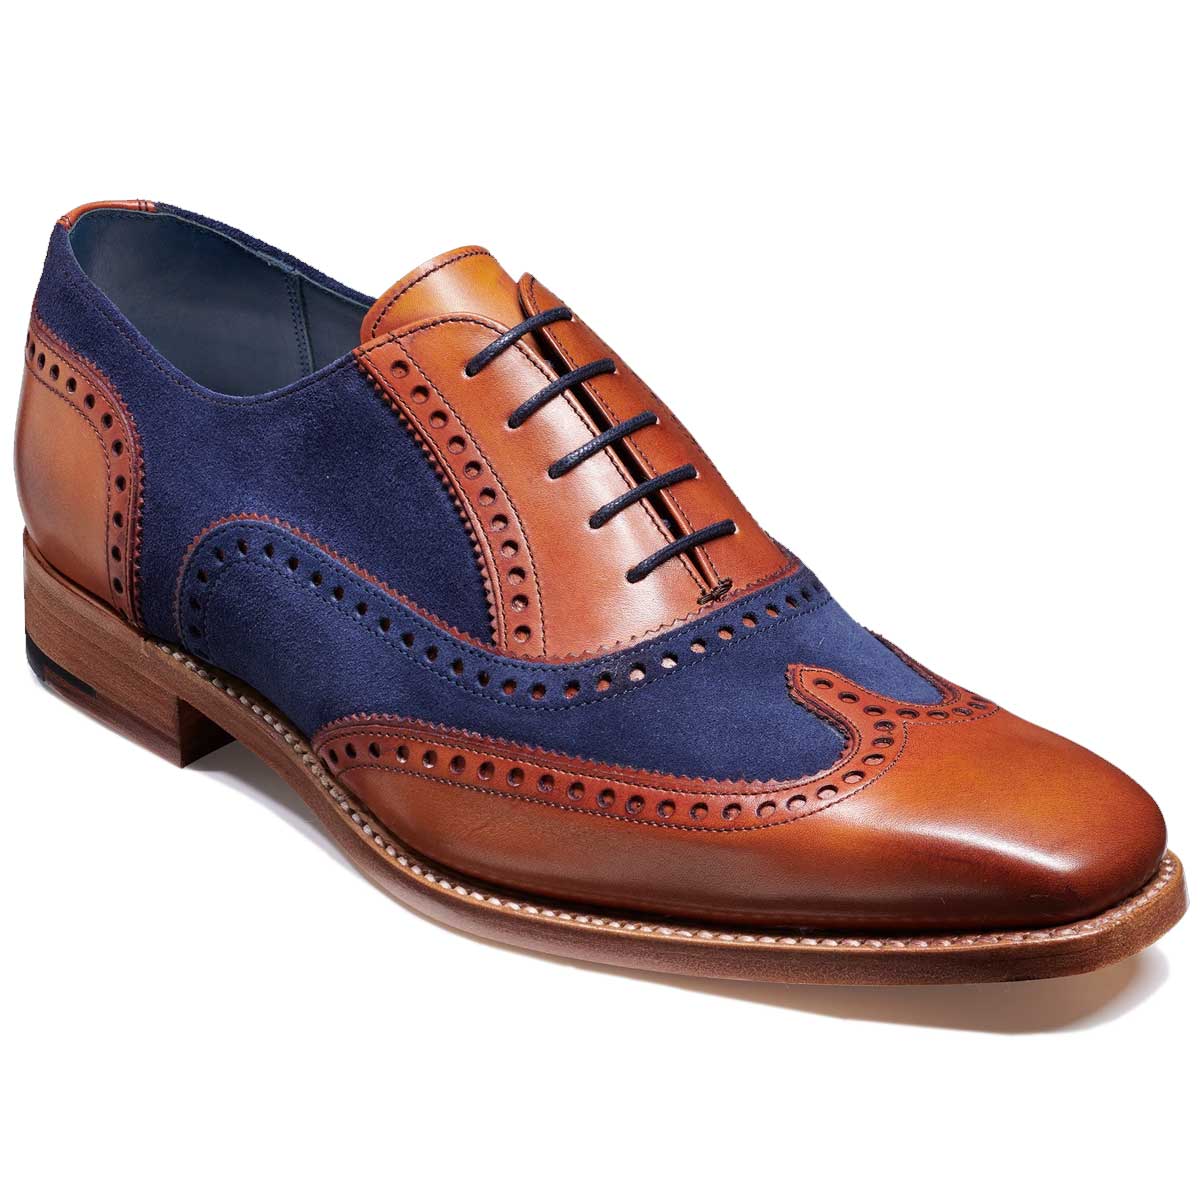 BARKER Spencer Shoes - Mens Brogue - Antique Rosewood & Navy Suede